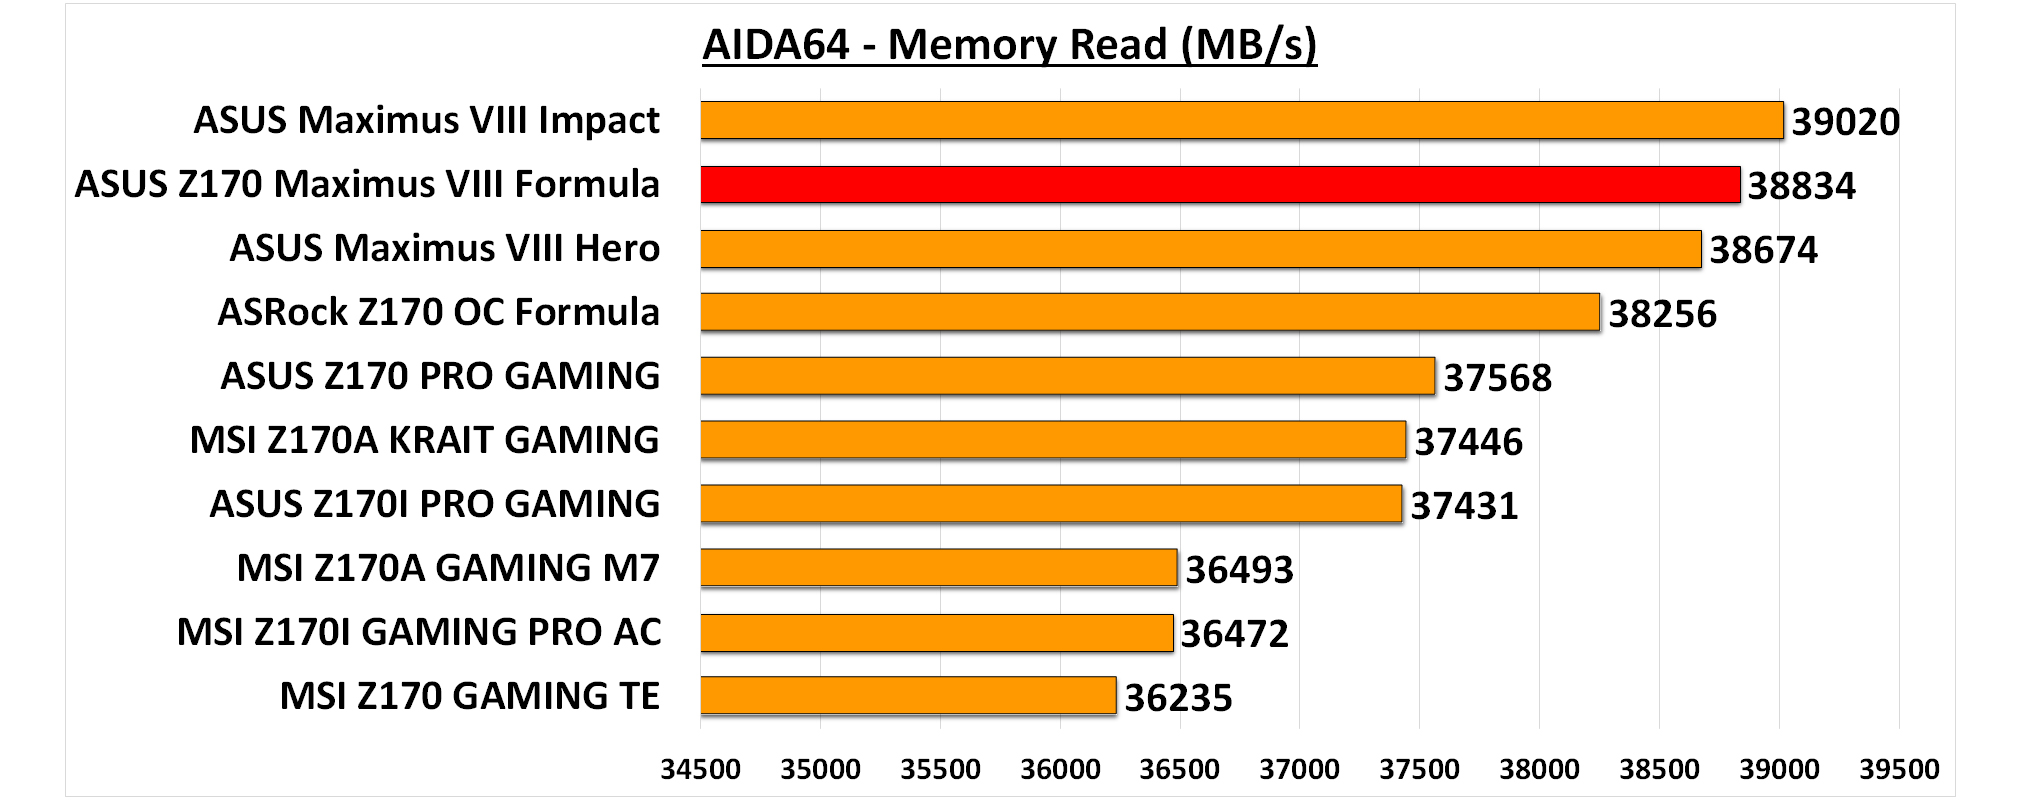 AIDA64 Memory Read